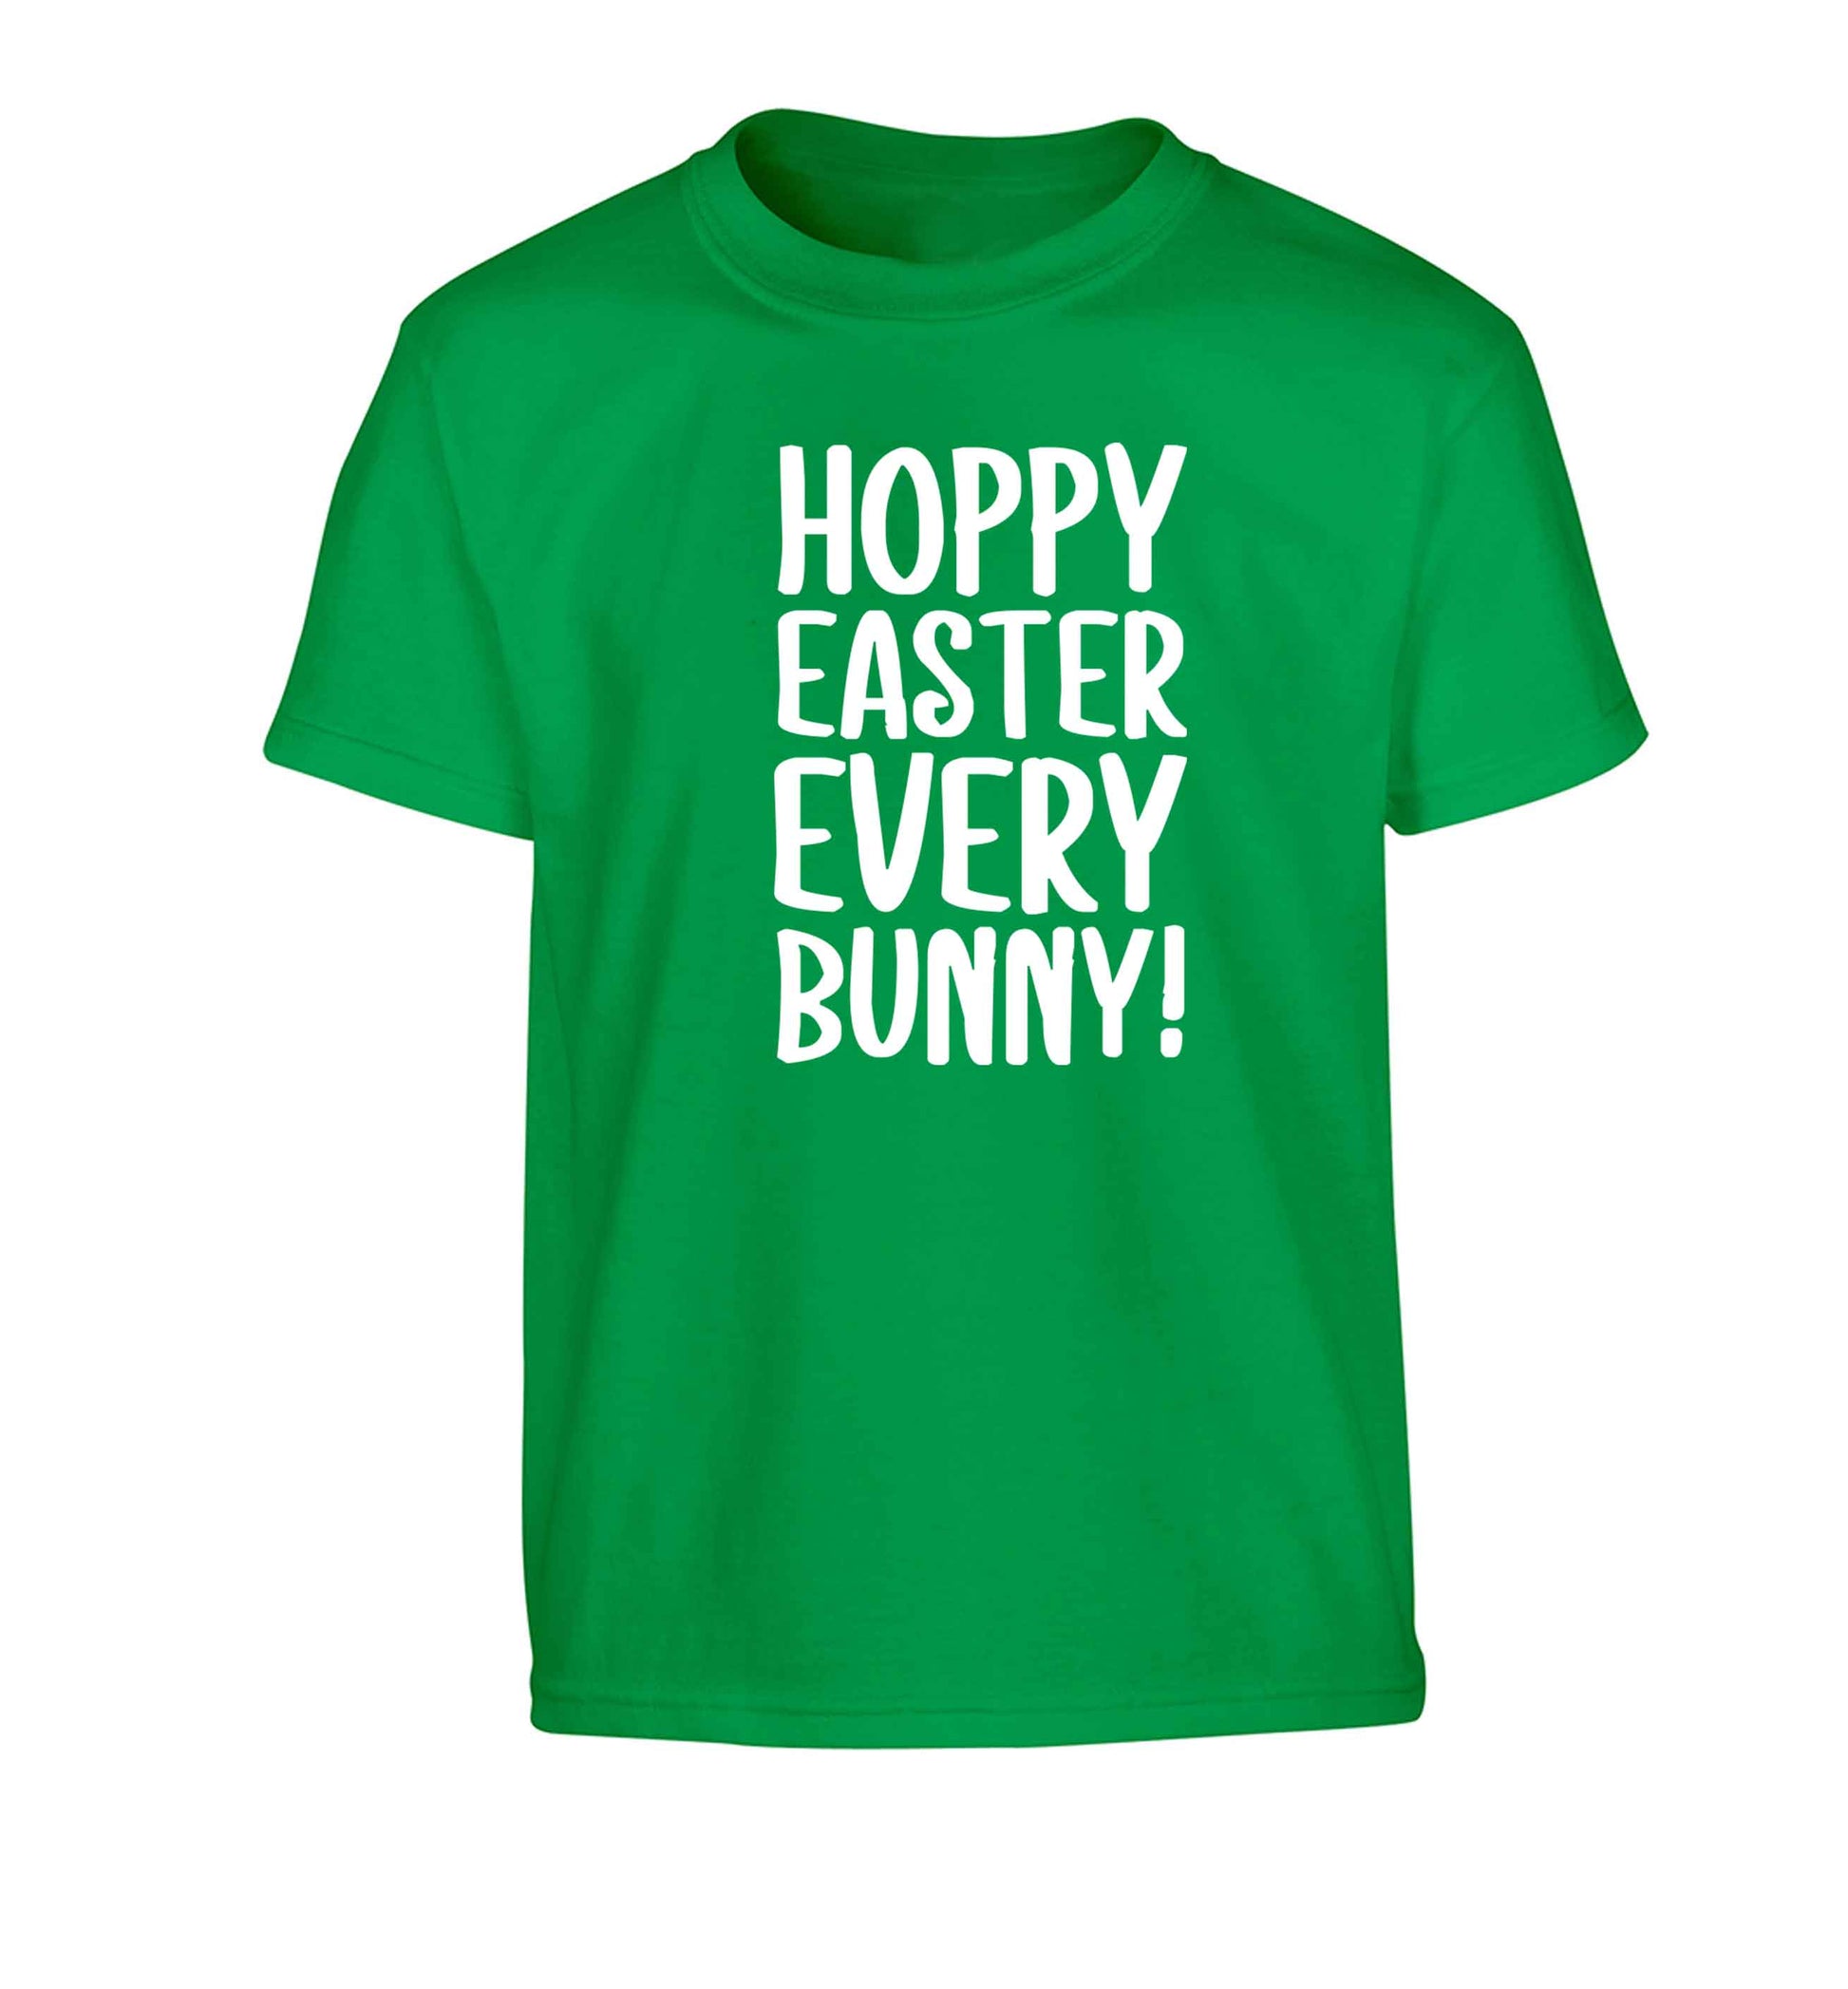 Hoppy Easter every bunny! Children's green Tshirt 12-13 Years